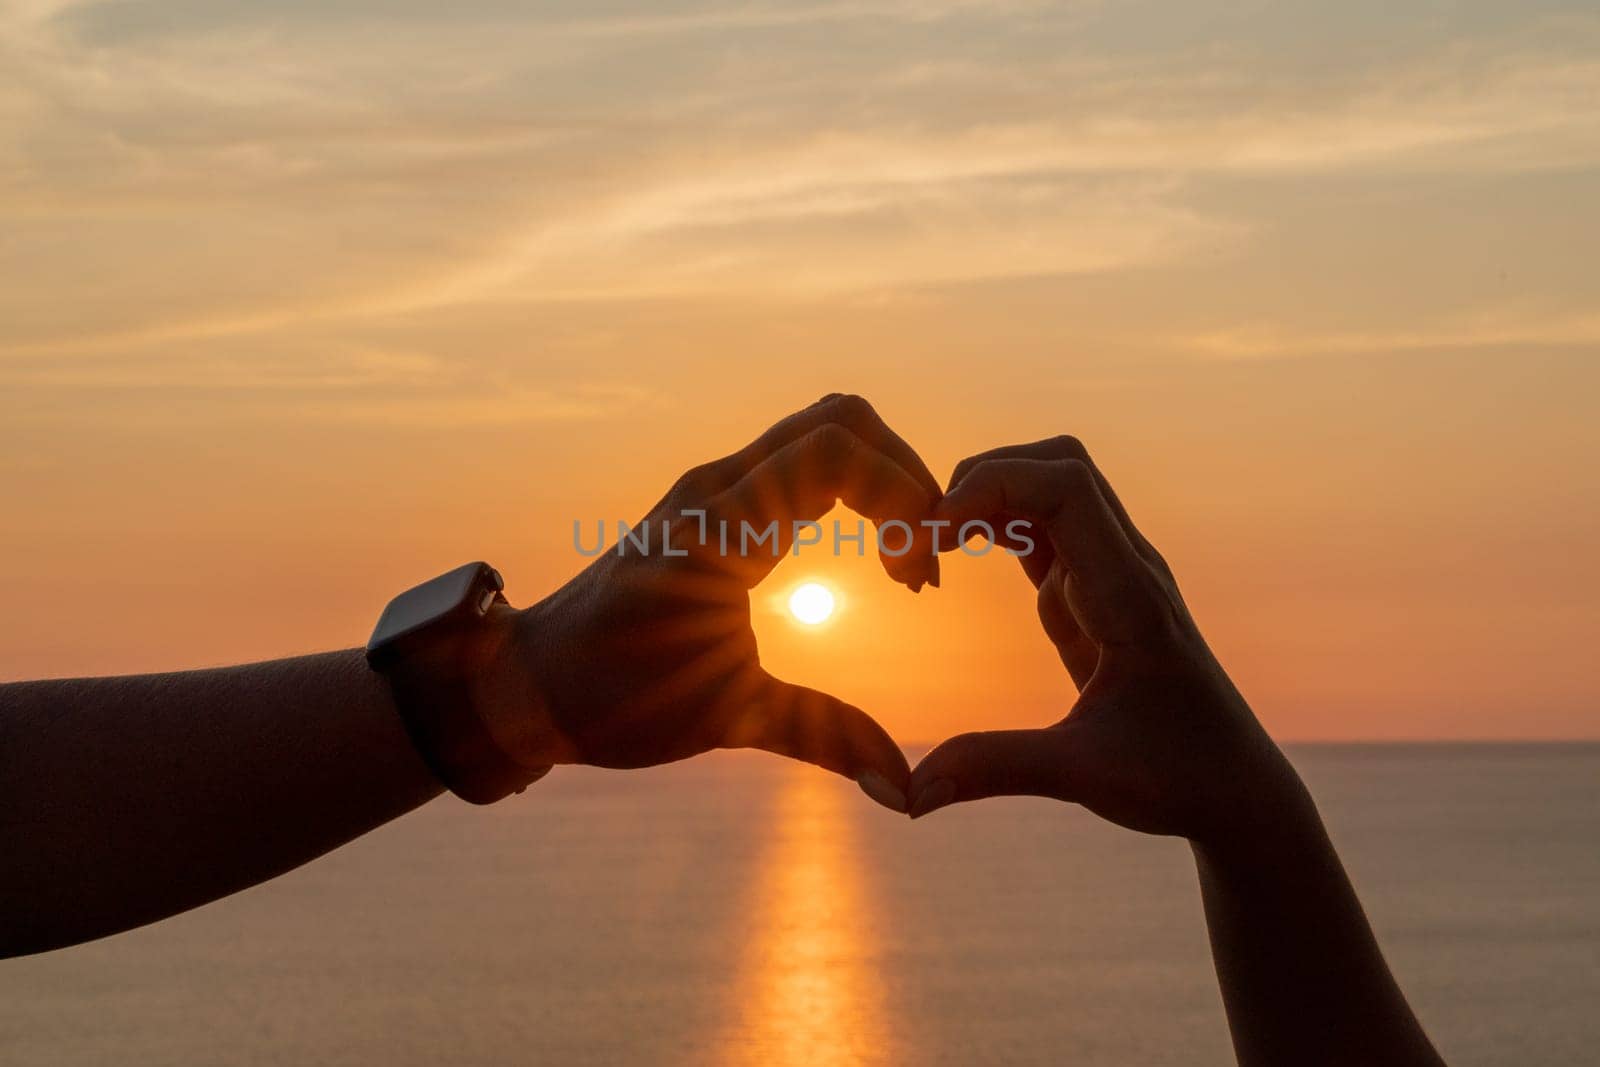 Hands heart sea sanset. Hands forming a heart shape made against the sun sky of a sunrise or sunset on a beach by Matiunina